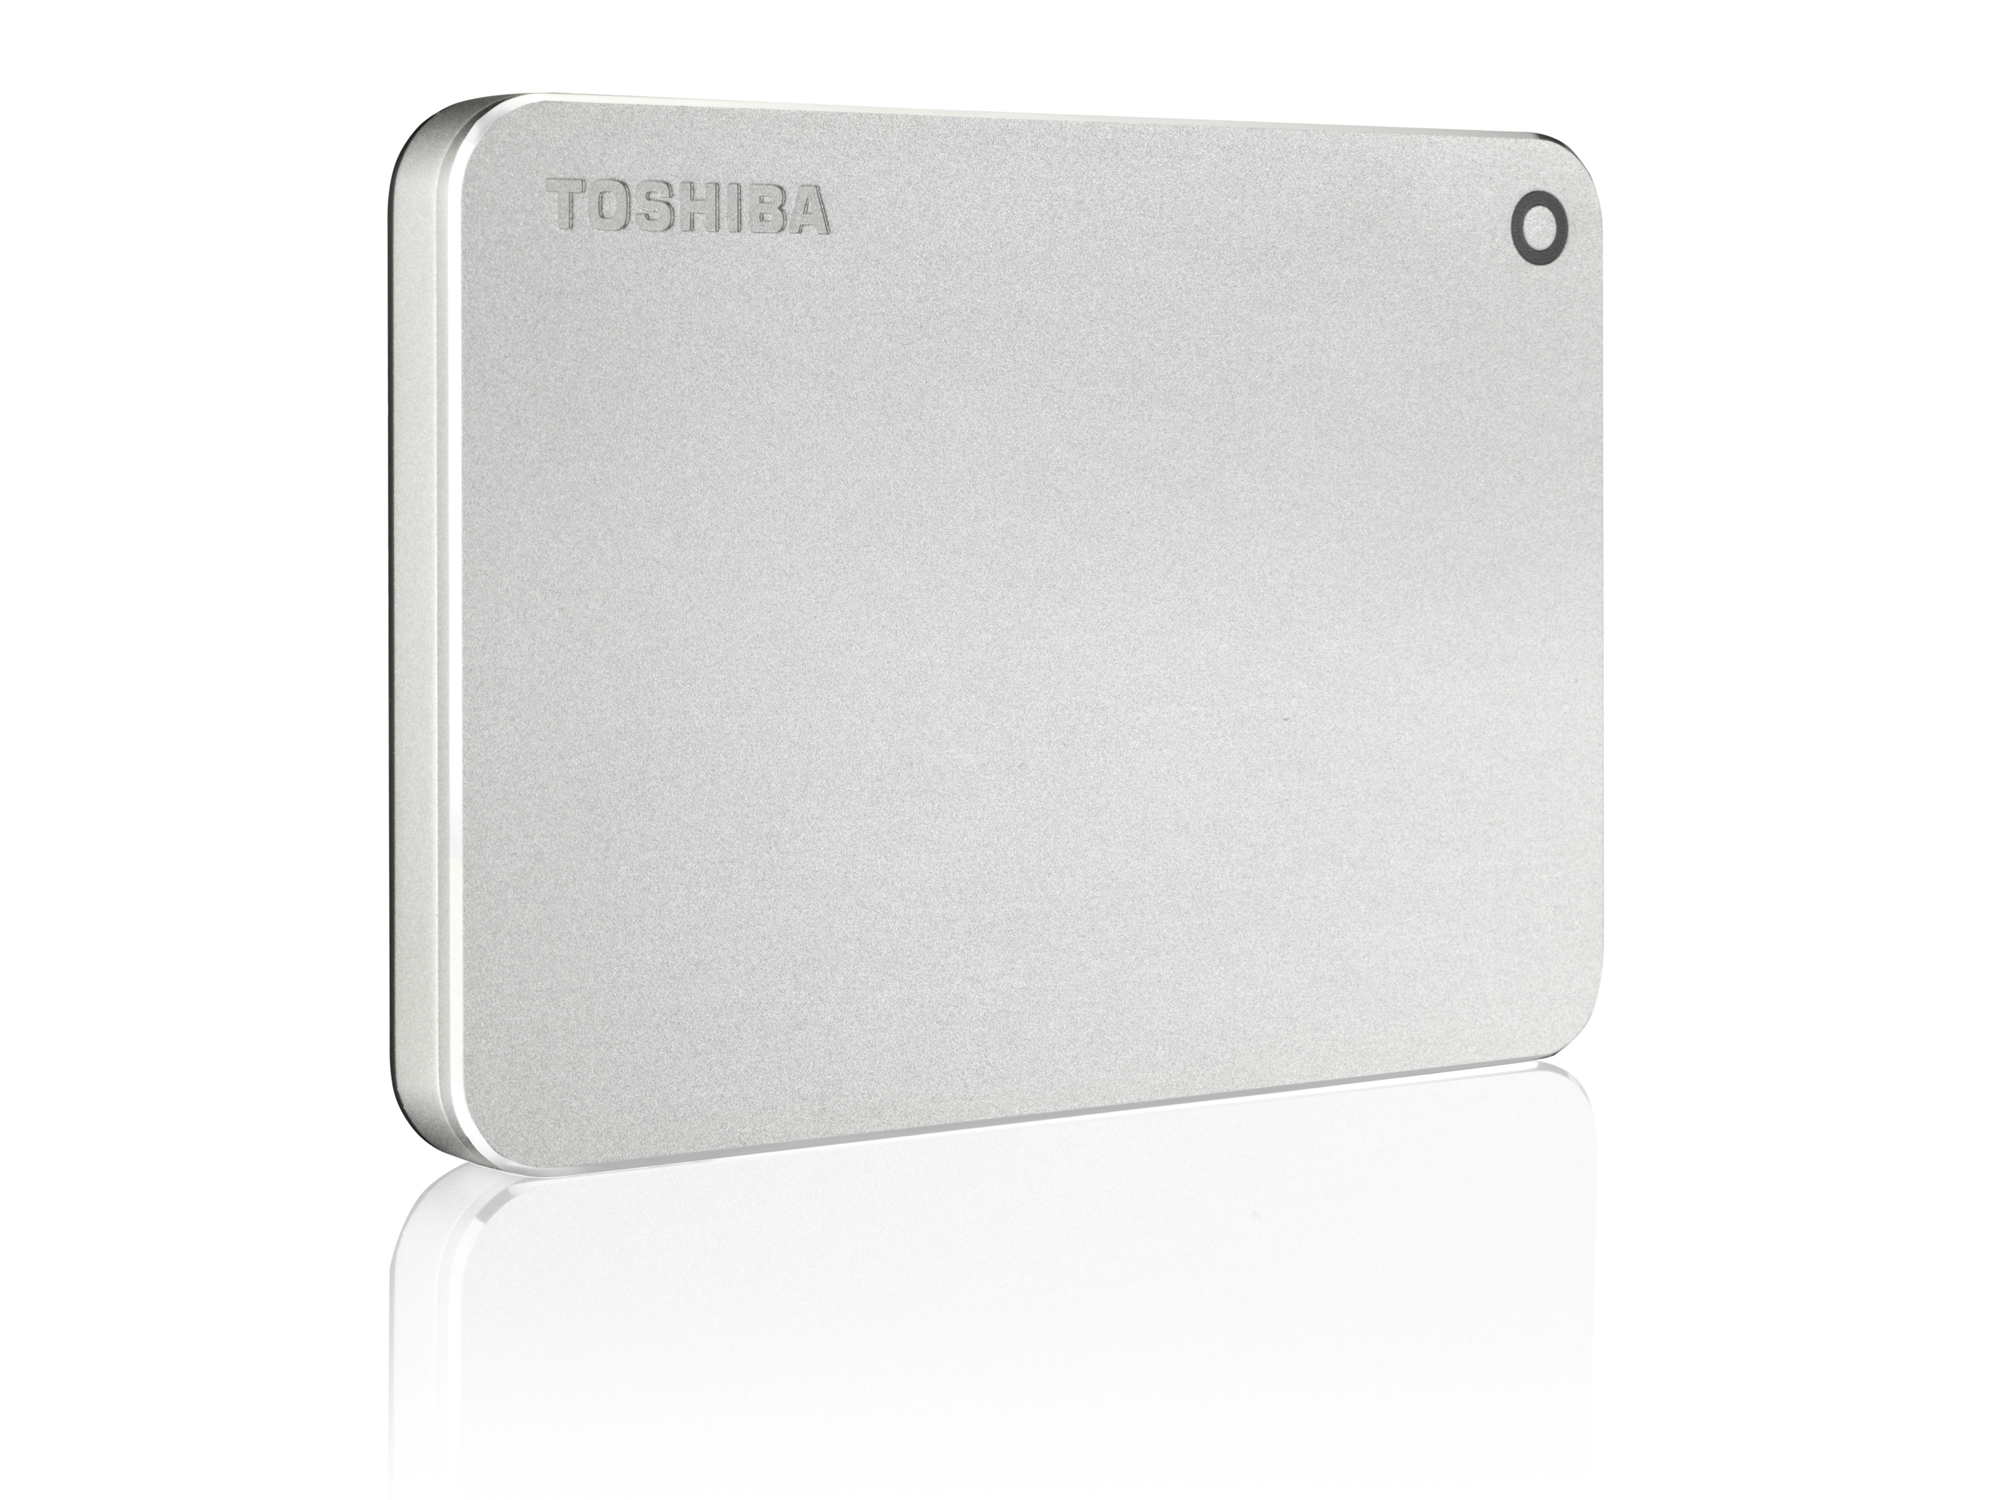 Toshiba Canvio Premium 4TB review: An underwhelming addition to